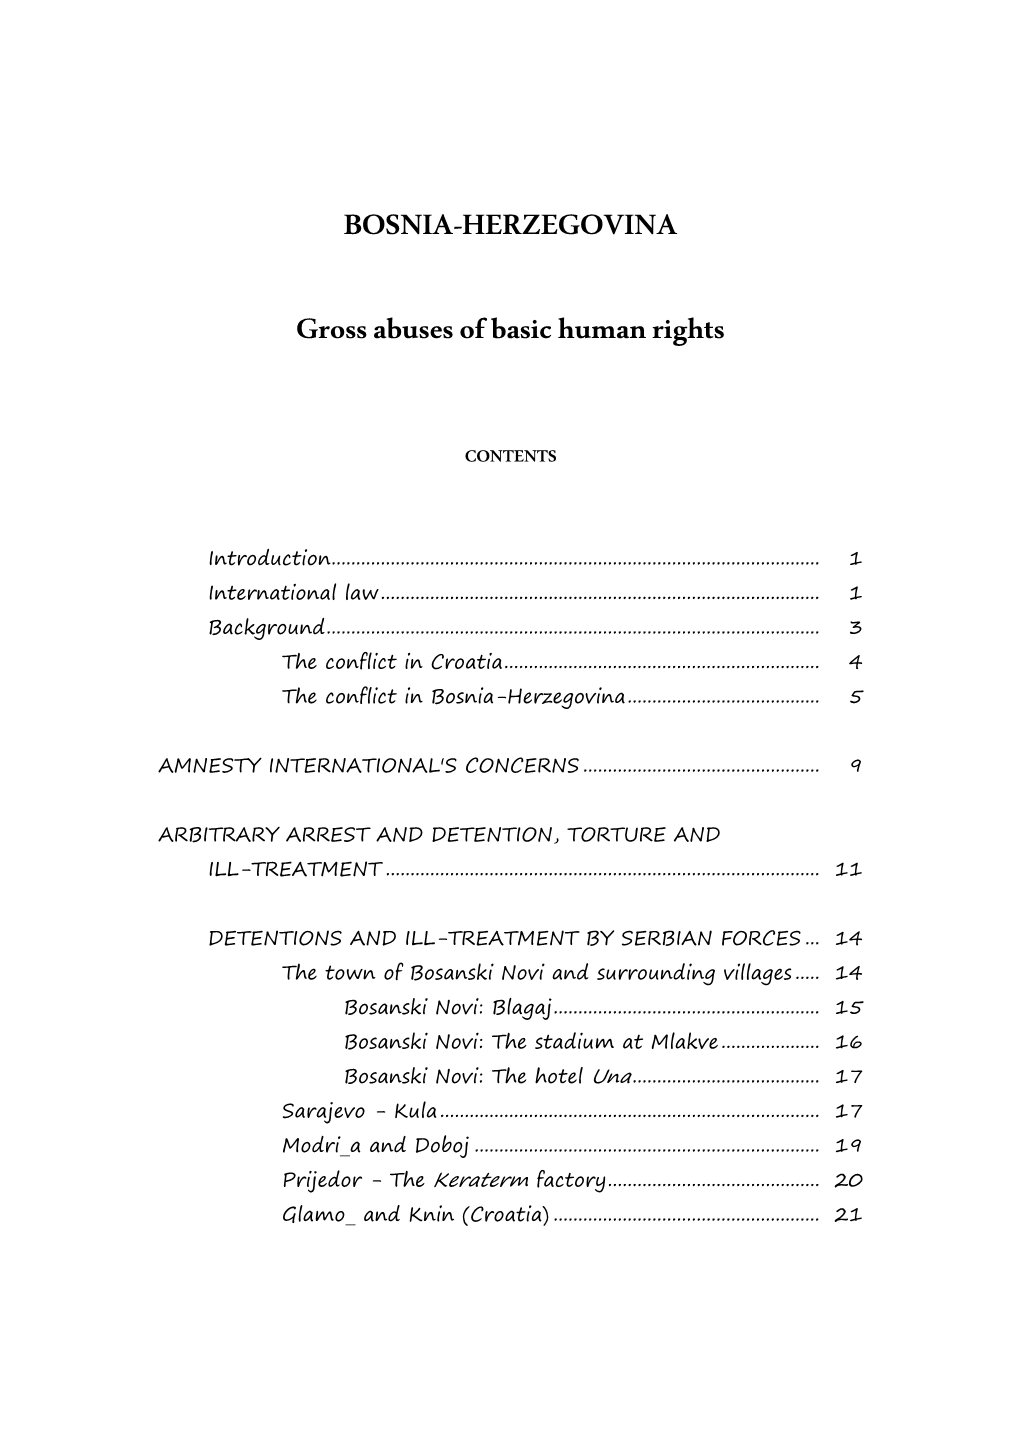 BOSNIA-HERZEGOVINA Gross Abuses of Basic Human Rights